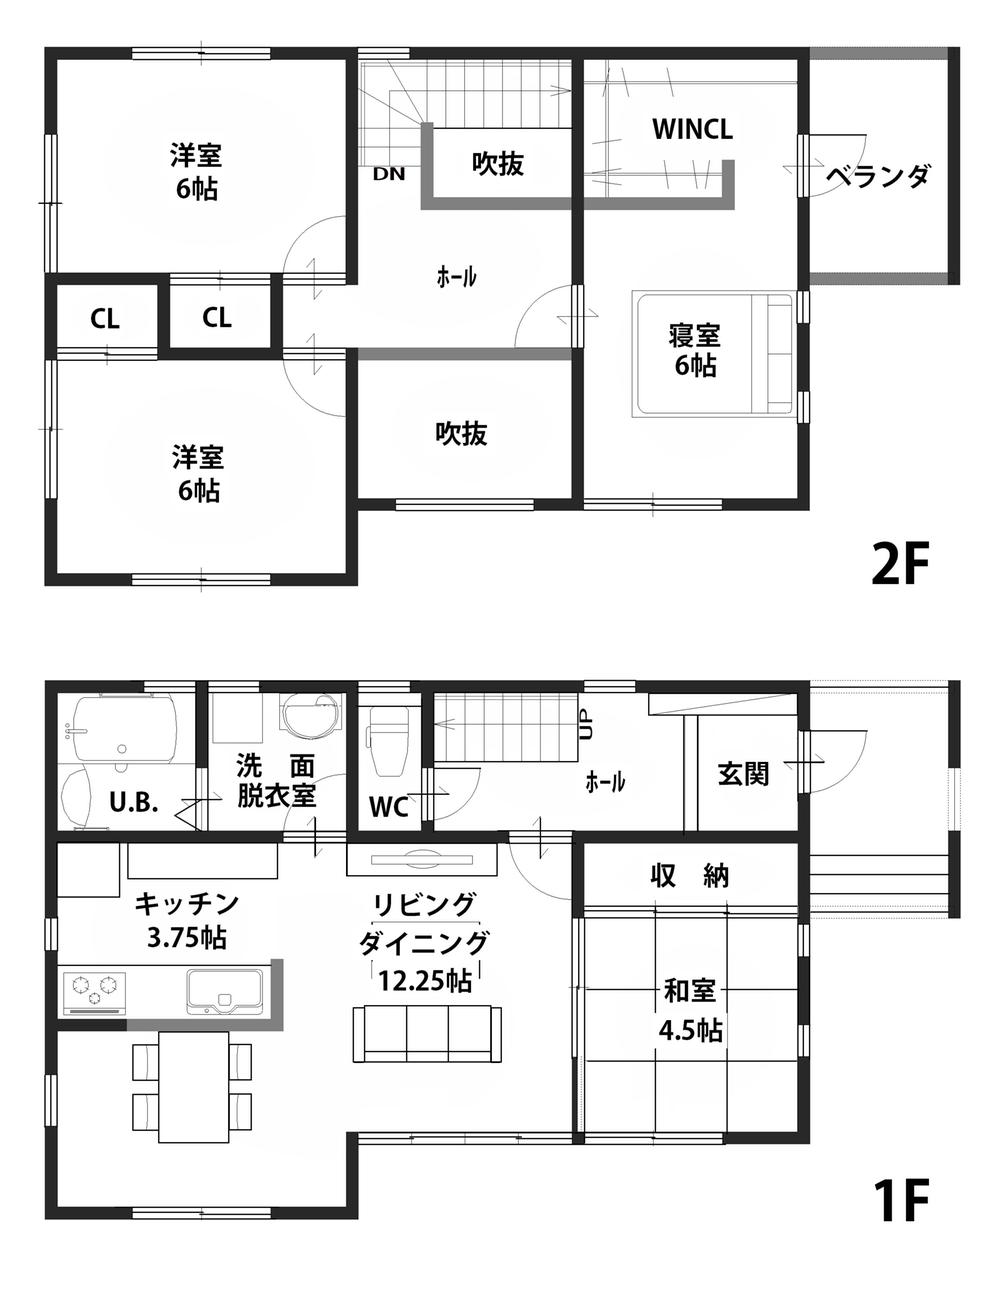 Building plan example (floor plan).  ■ Construction area 1F 52.998 sq m (16 square meters)      2F 46.374 sq m (14 square meters)  □ Total floor area   99.372 sq m (30 square meters)